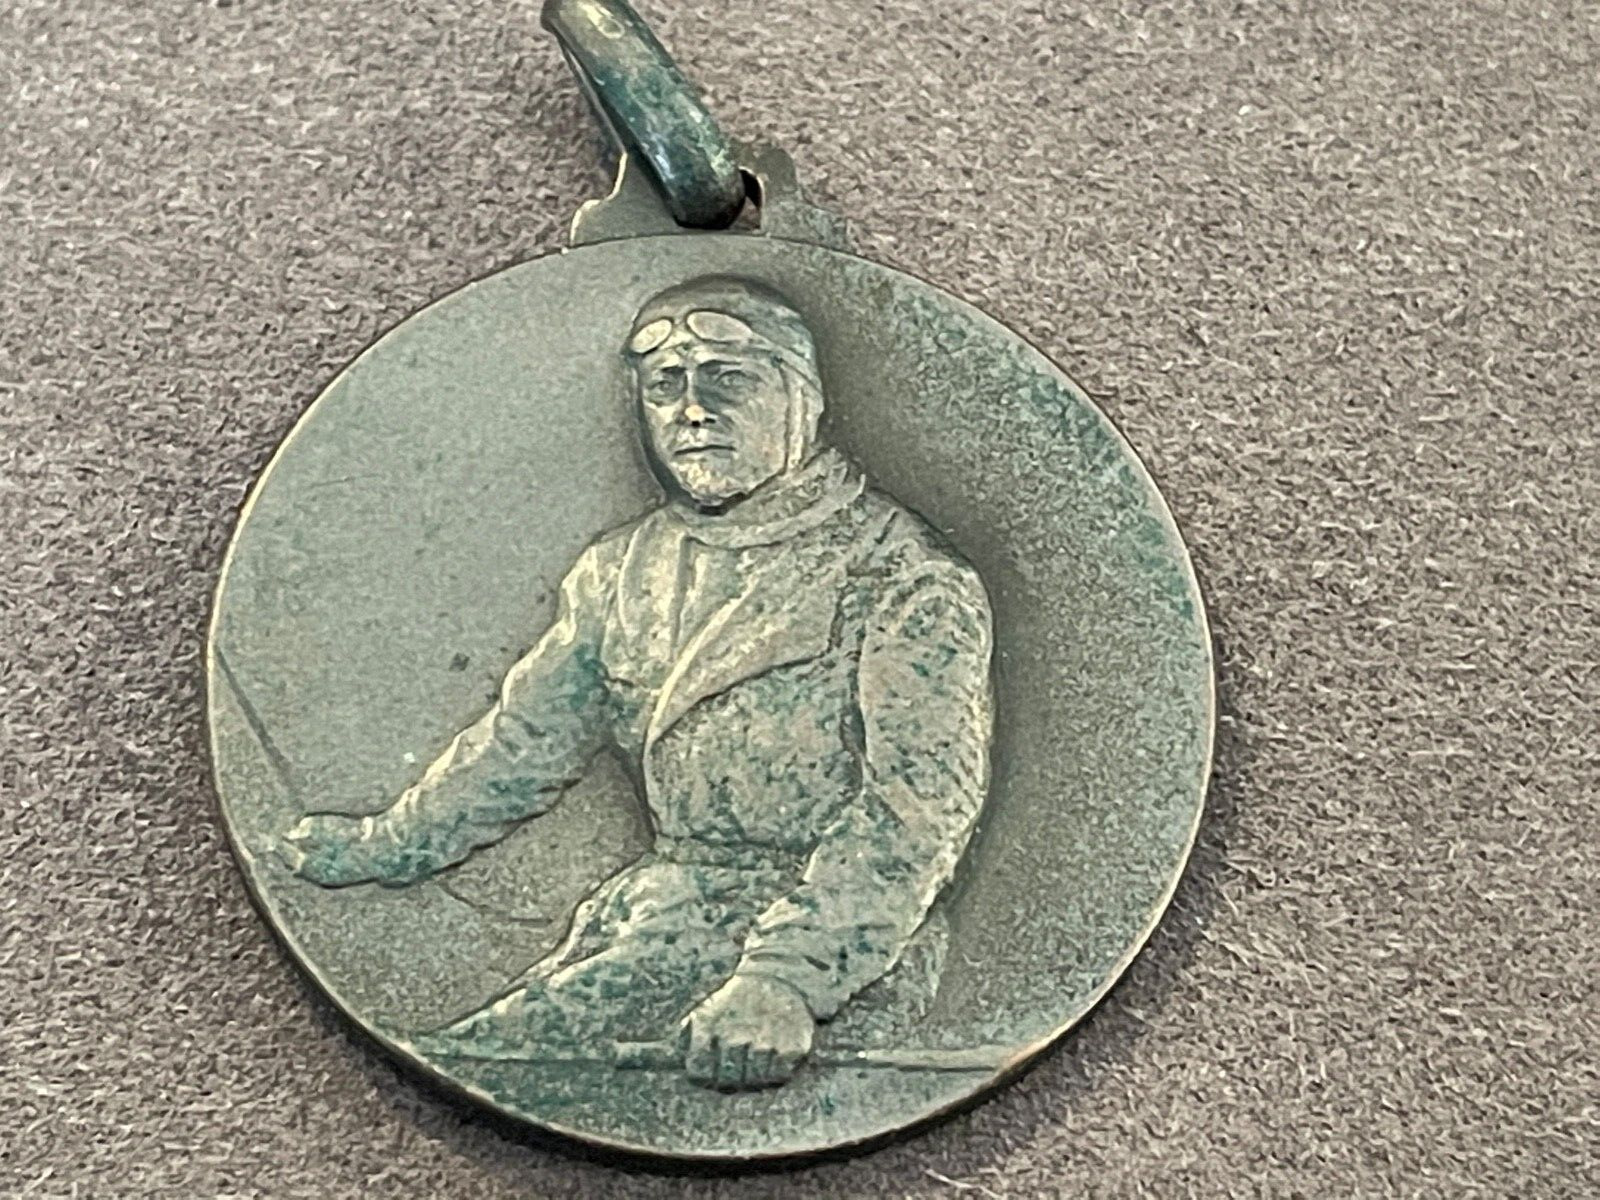 Antique and Rare 1933 Chicago World's Italo Balbo Seaplane Medal/Medallion